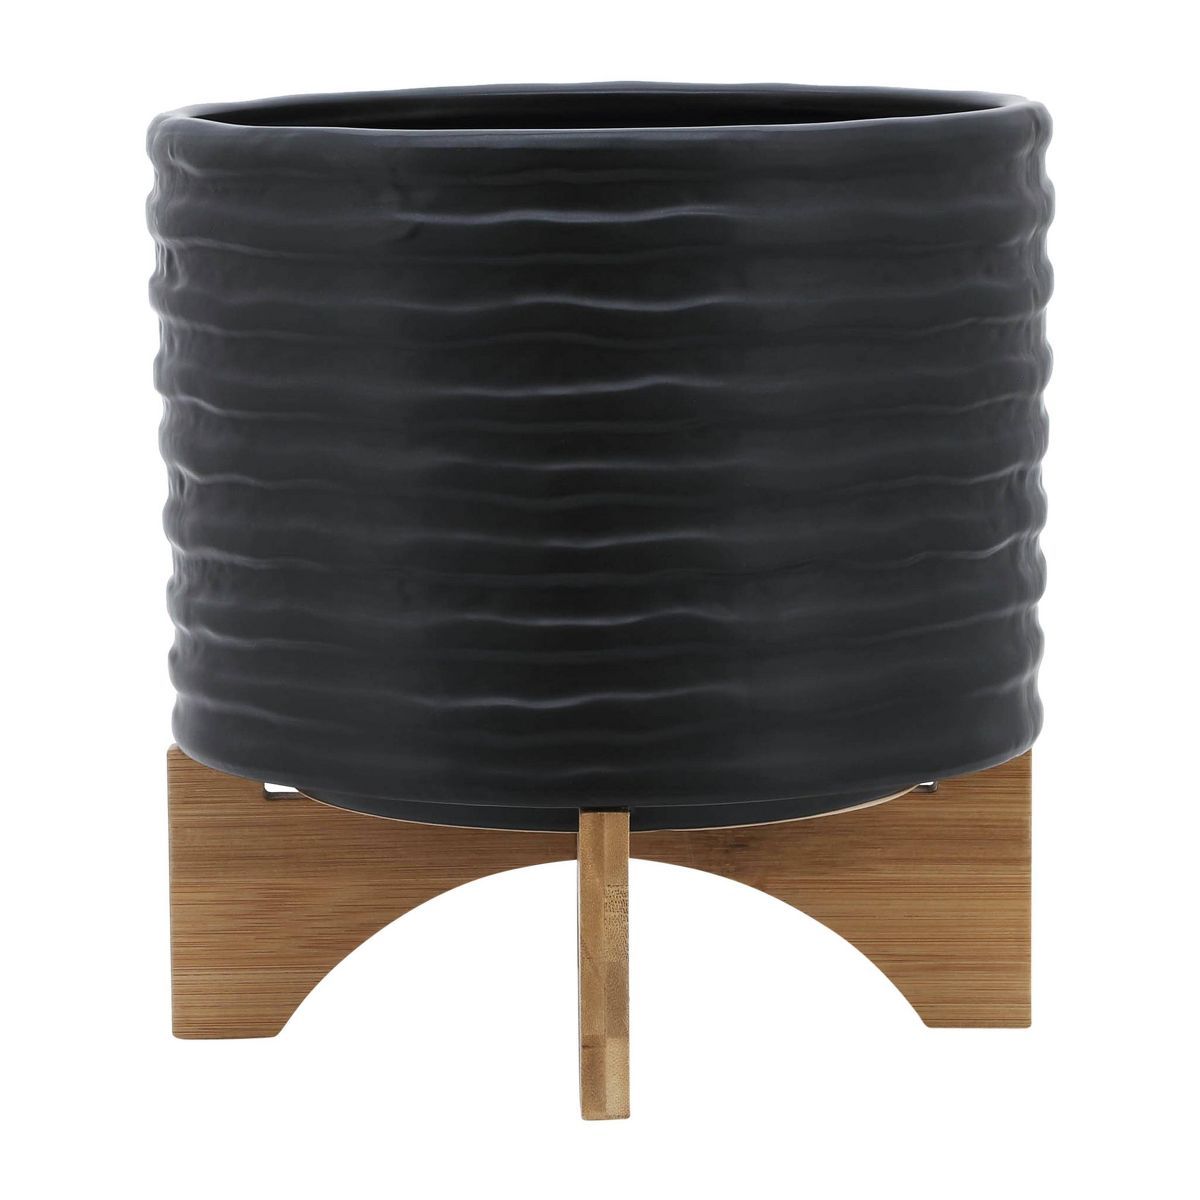 Sagebrook Home 11" Wide Textured Ceramic Planter Pot with Wood Stand Black | Target